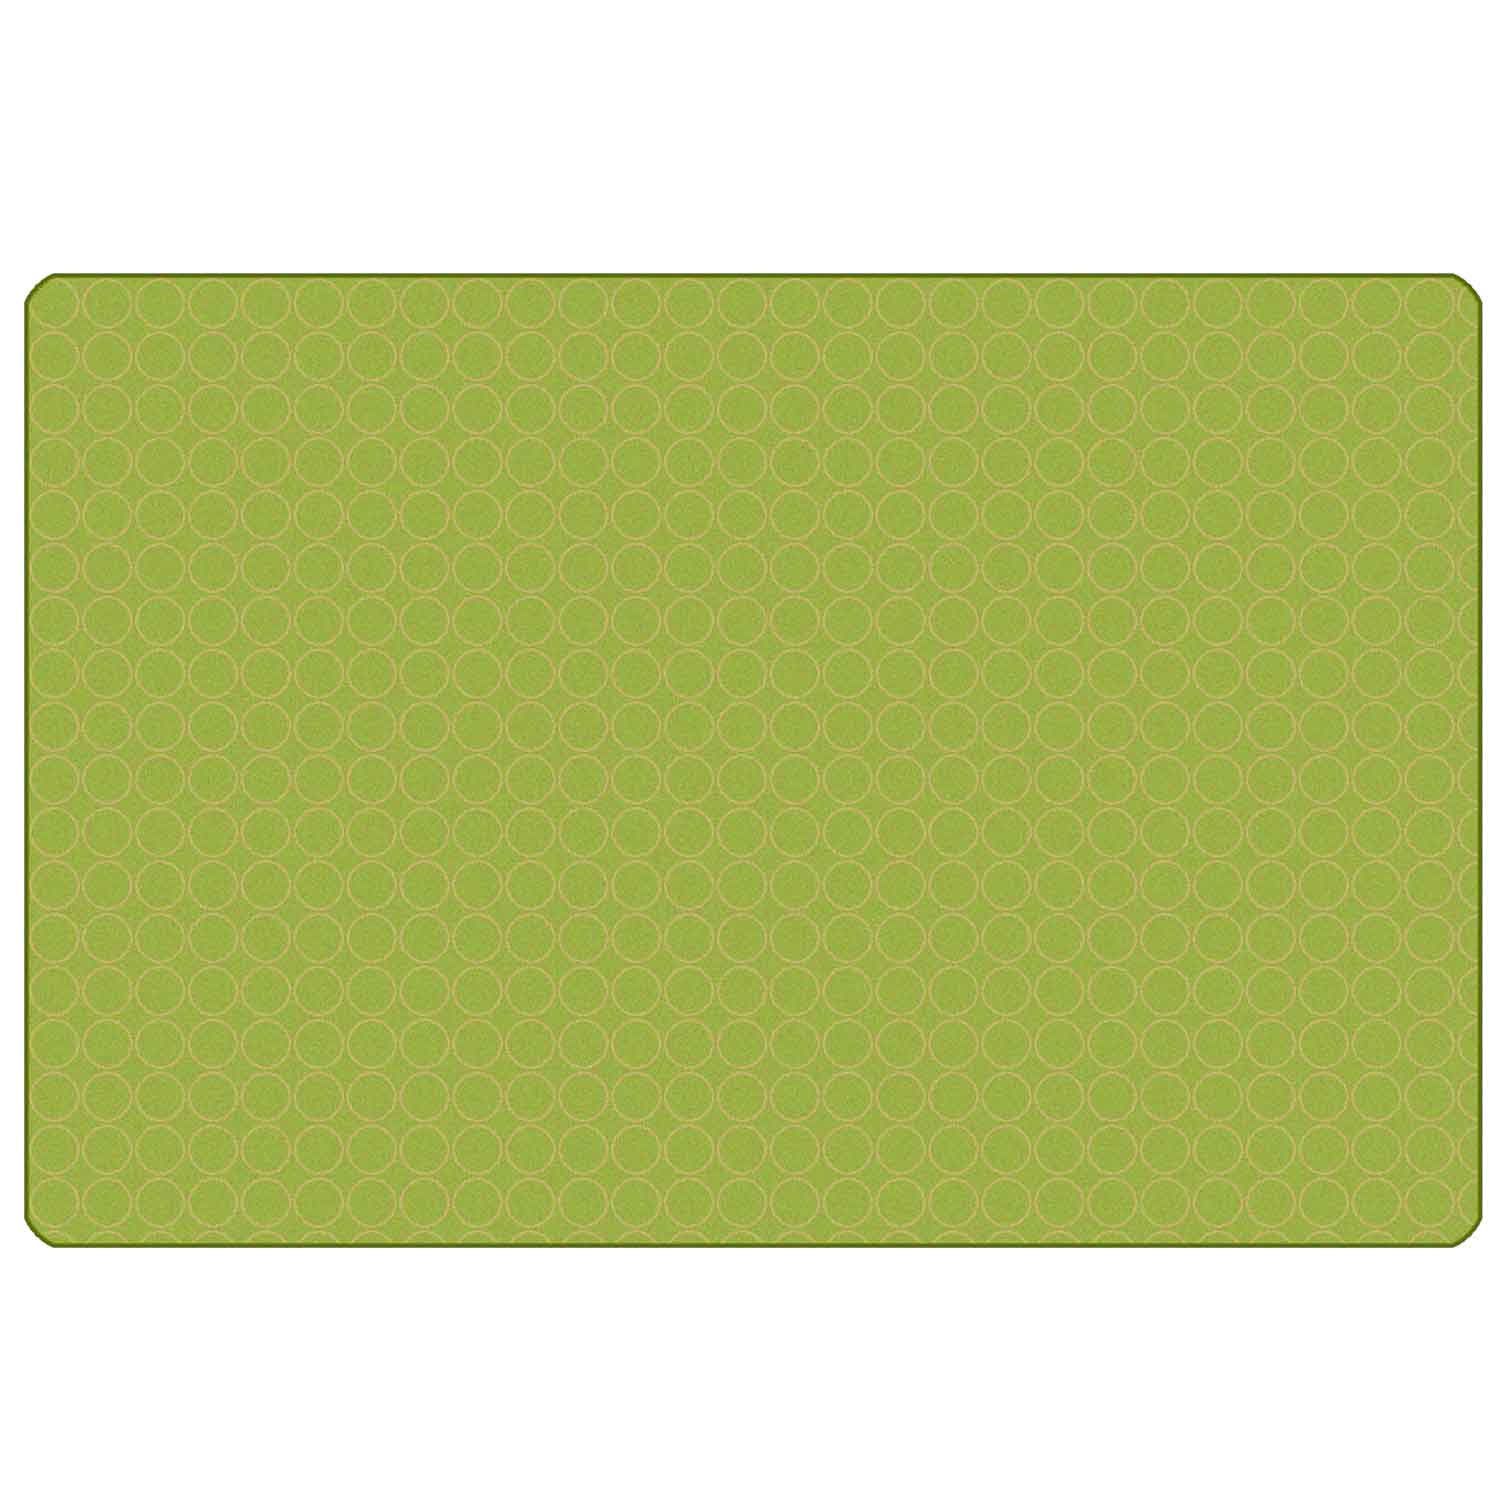 KIDSoft™ Comforting Circles Rug, Green Tan 6' x 9'